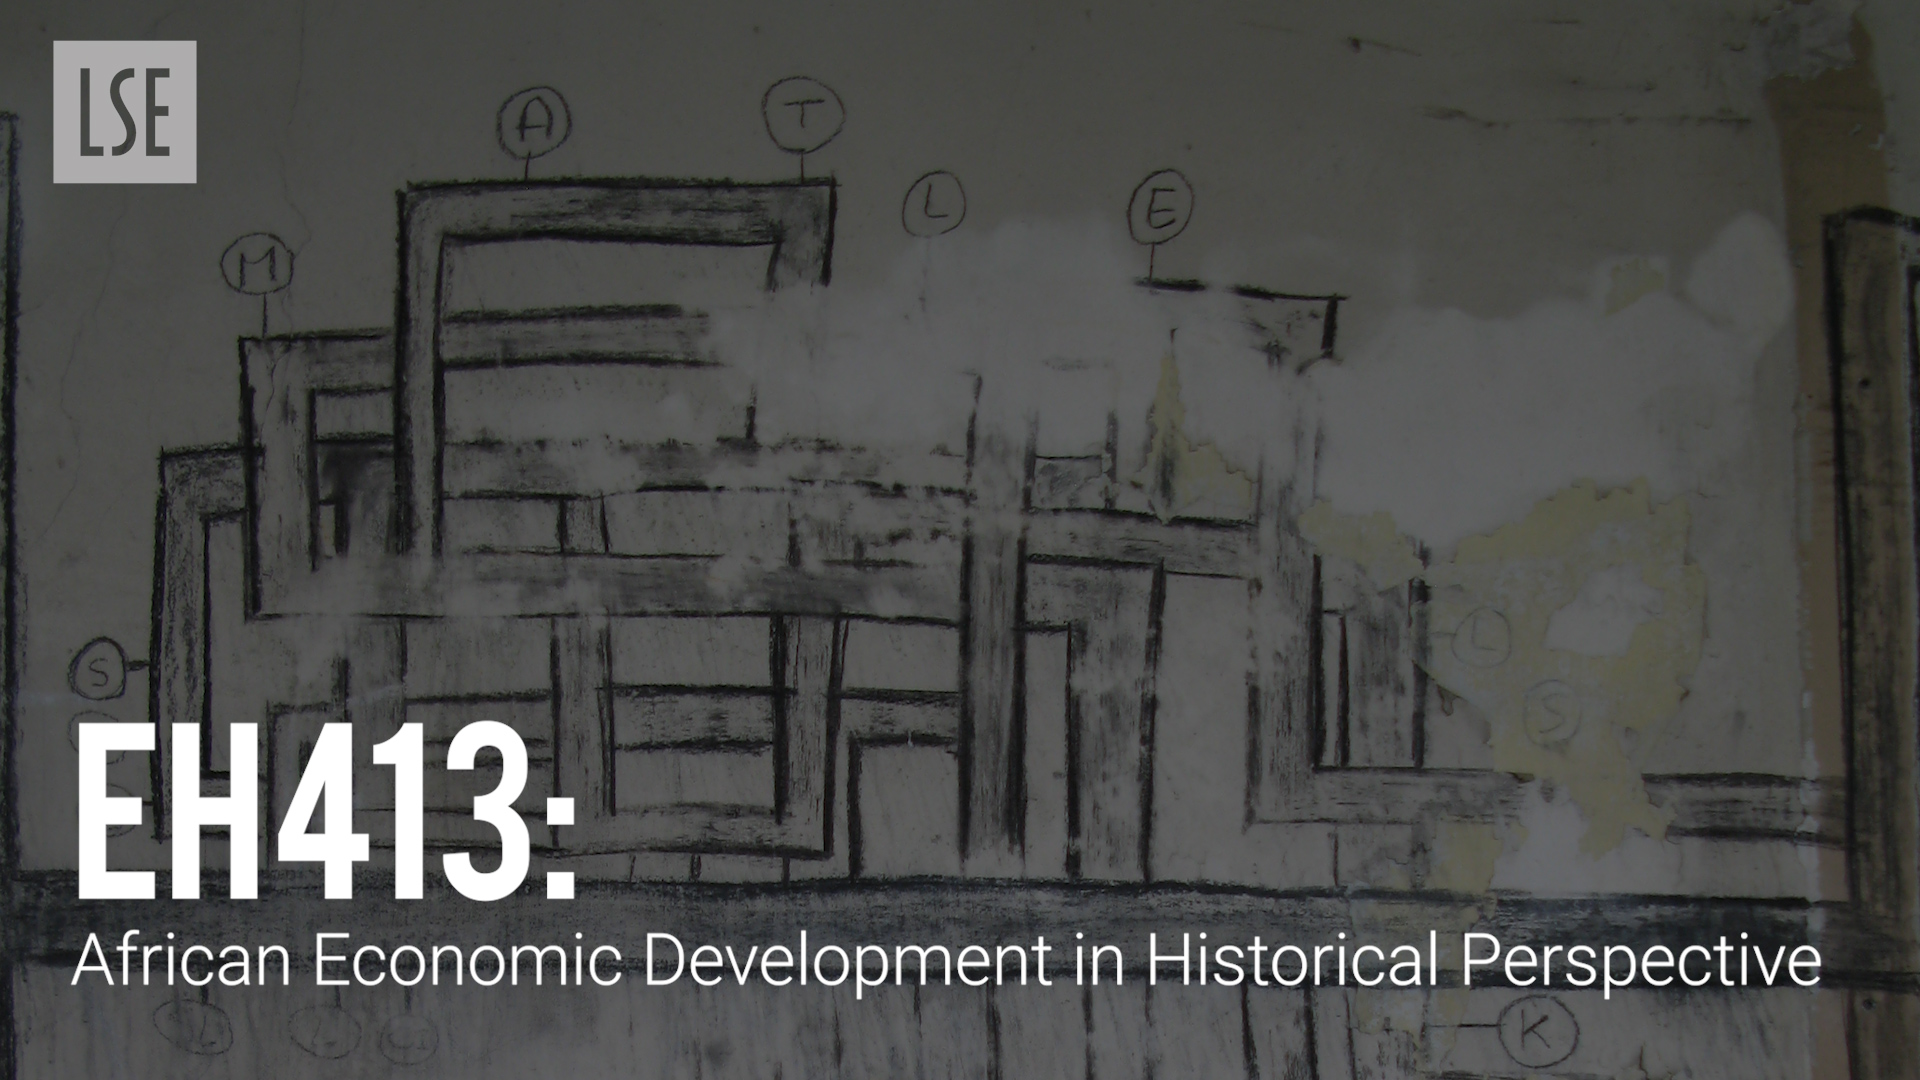 EH413 - African Economic Development in Historical Perspective